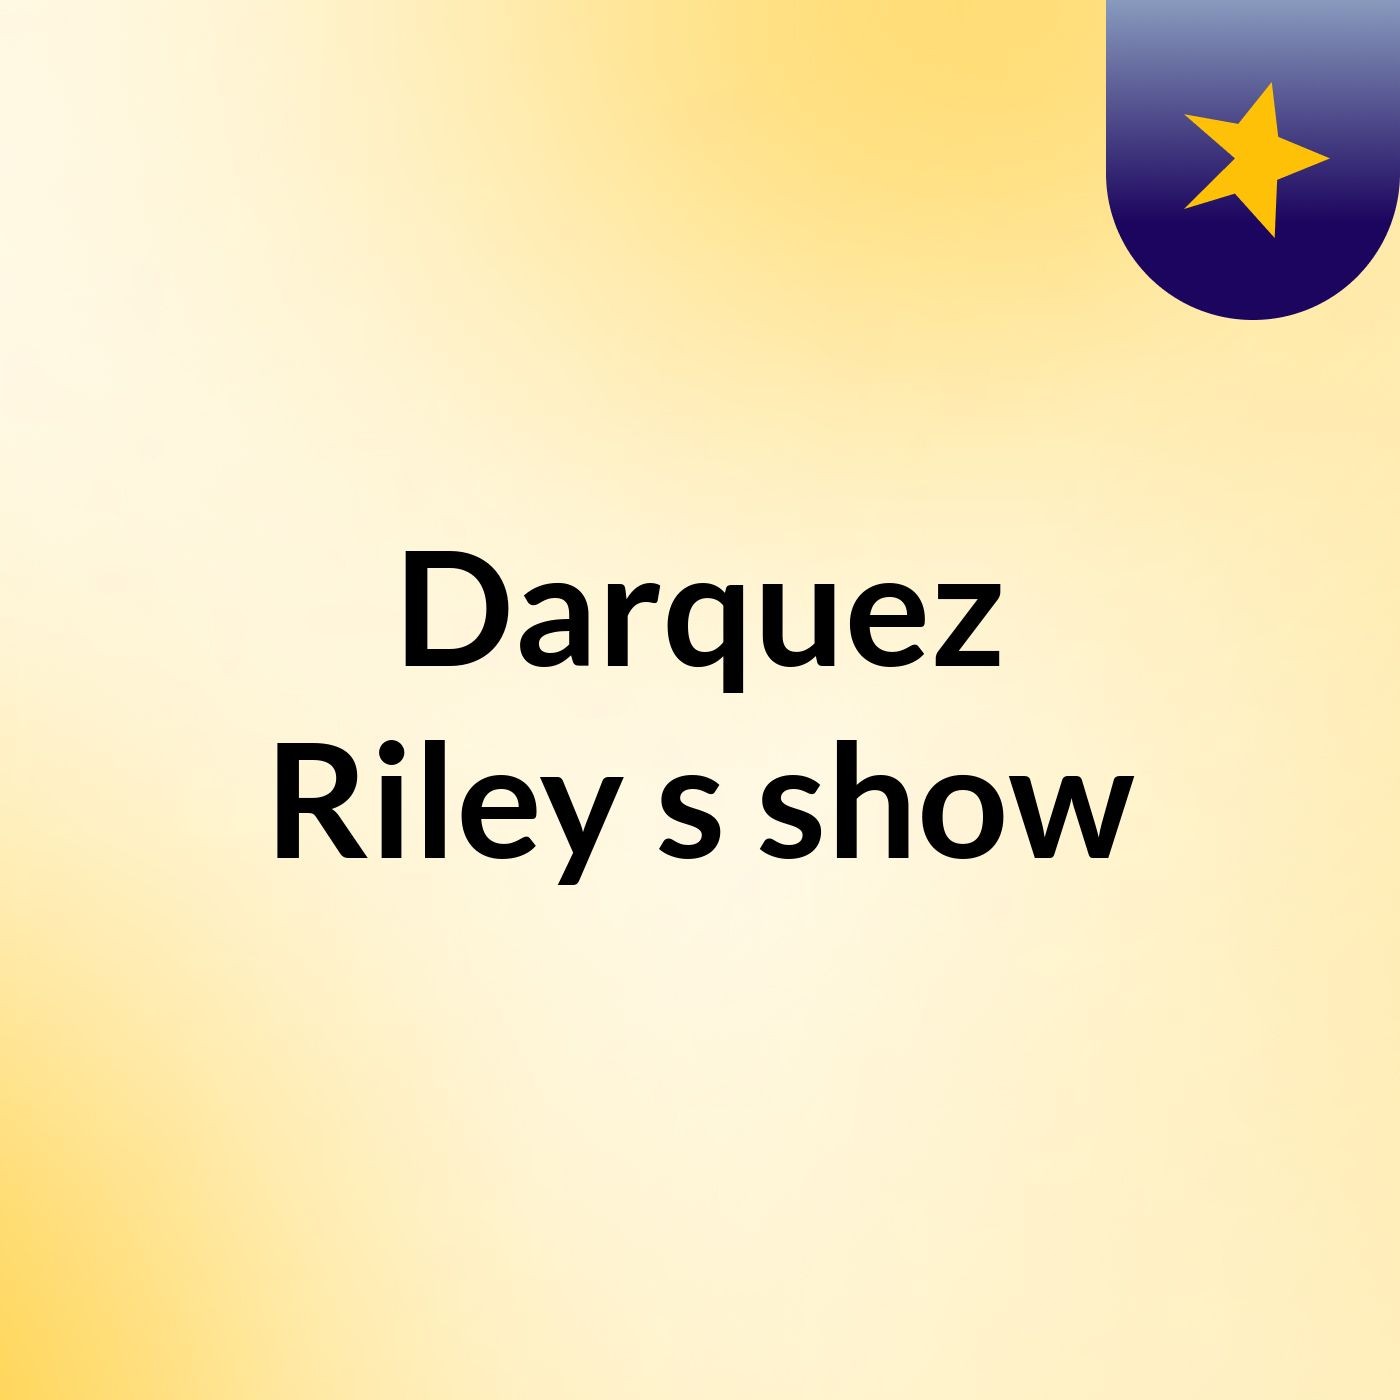 Darquez Riley's show